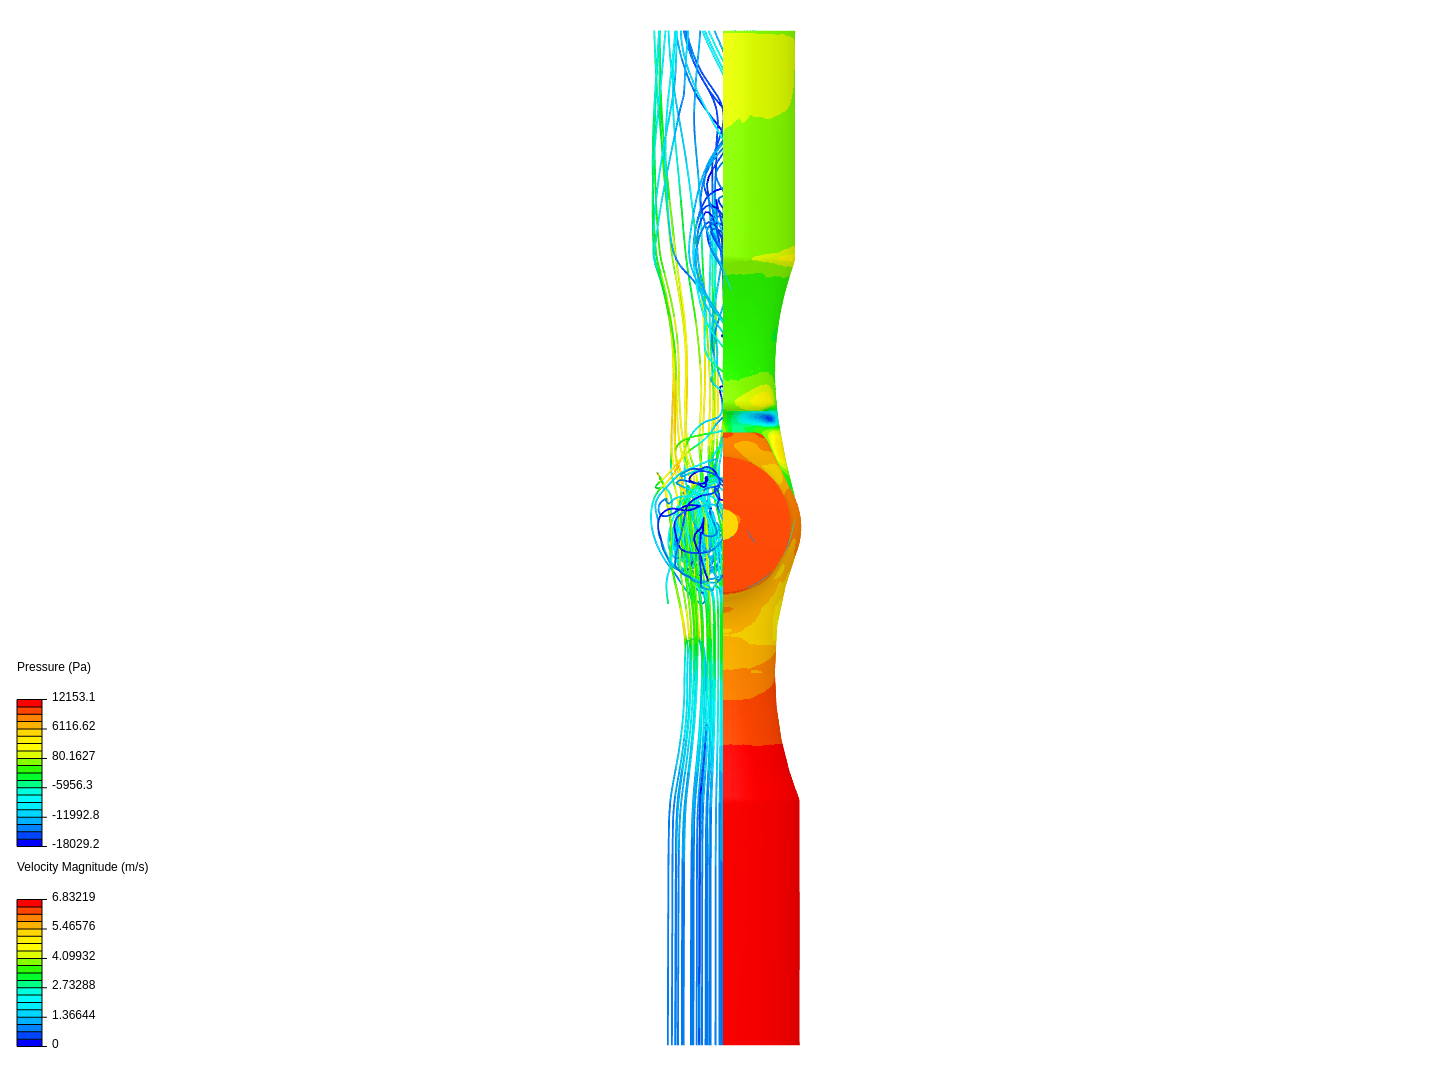 Globe valve simulation image